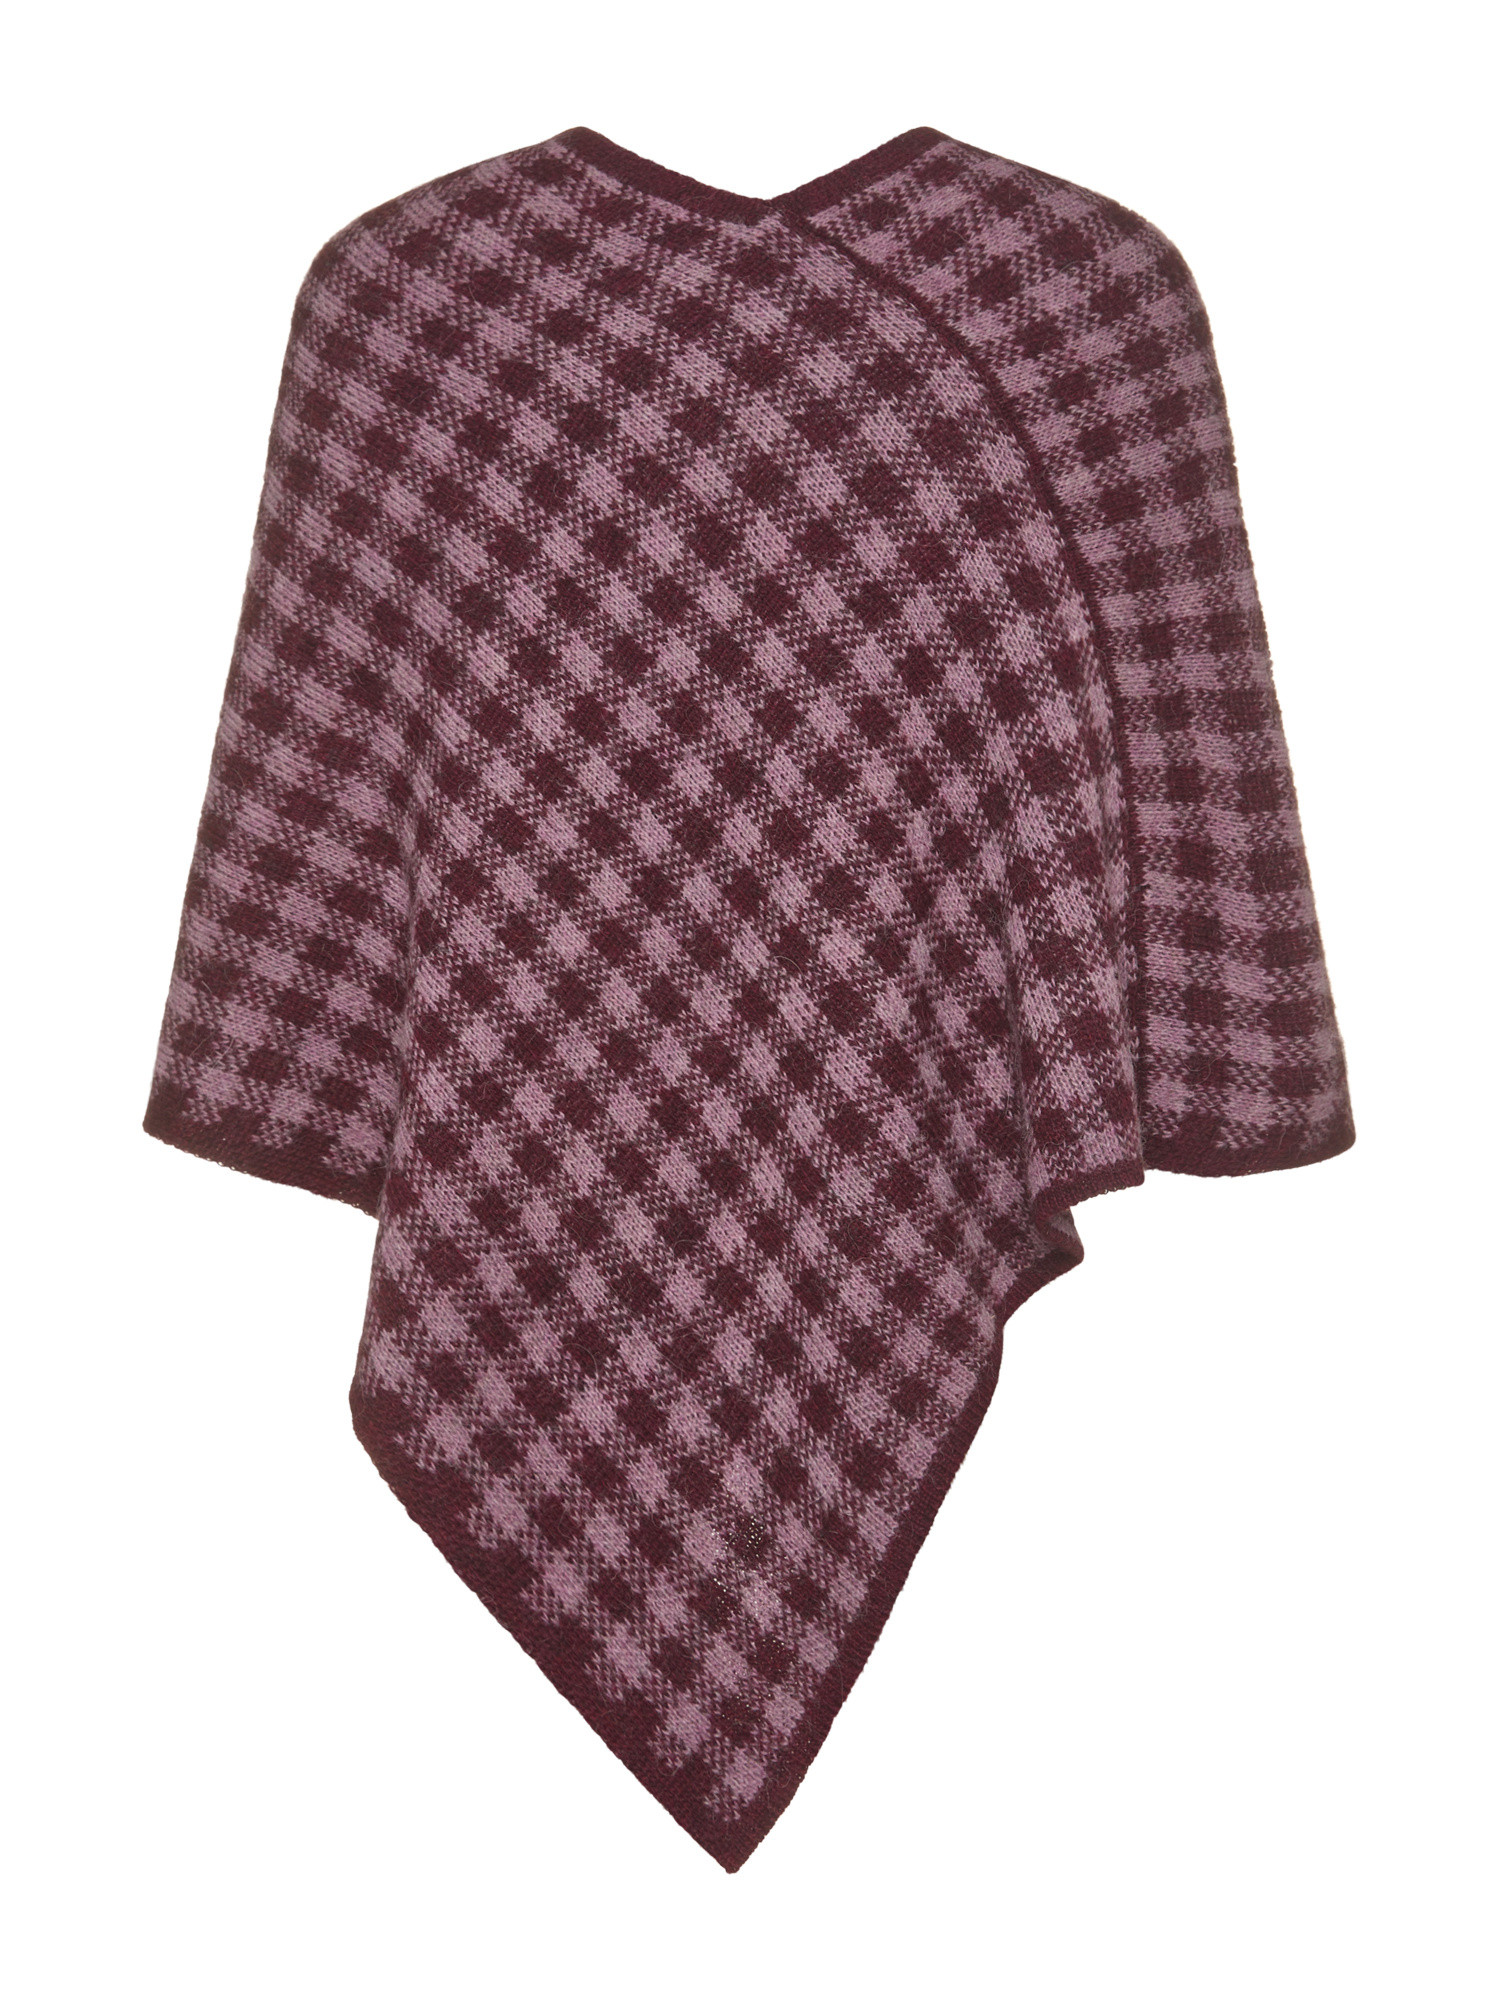 Koan - Checked jacquard knit poncho, Pink, large image number 1